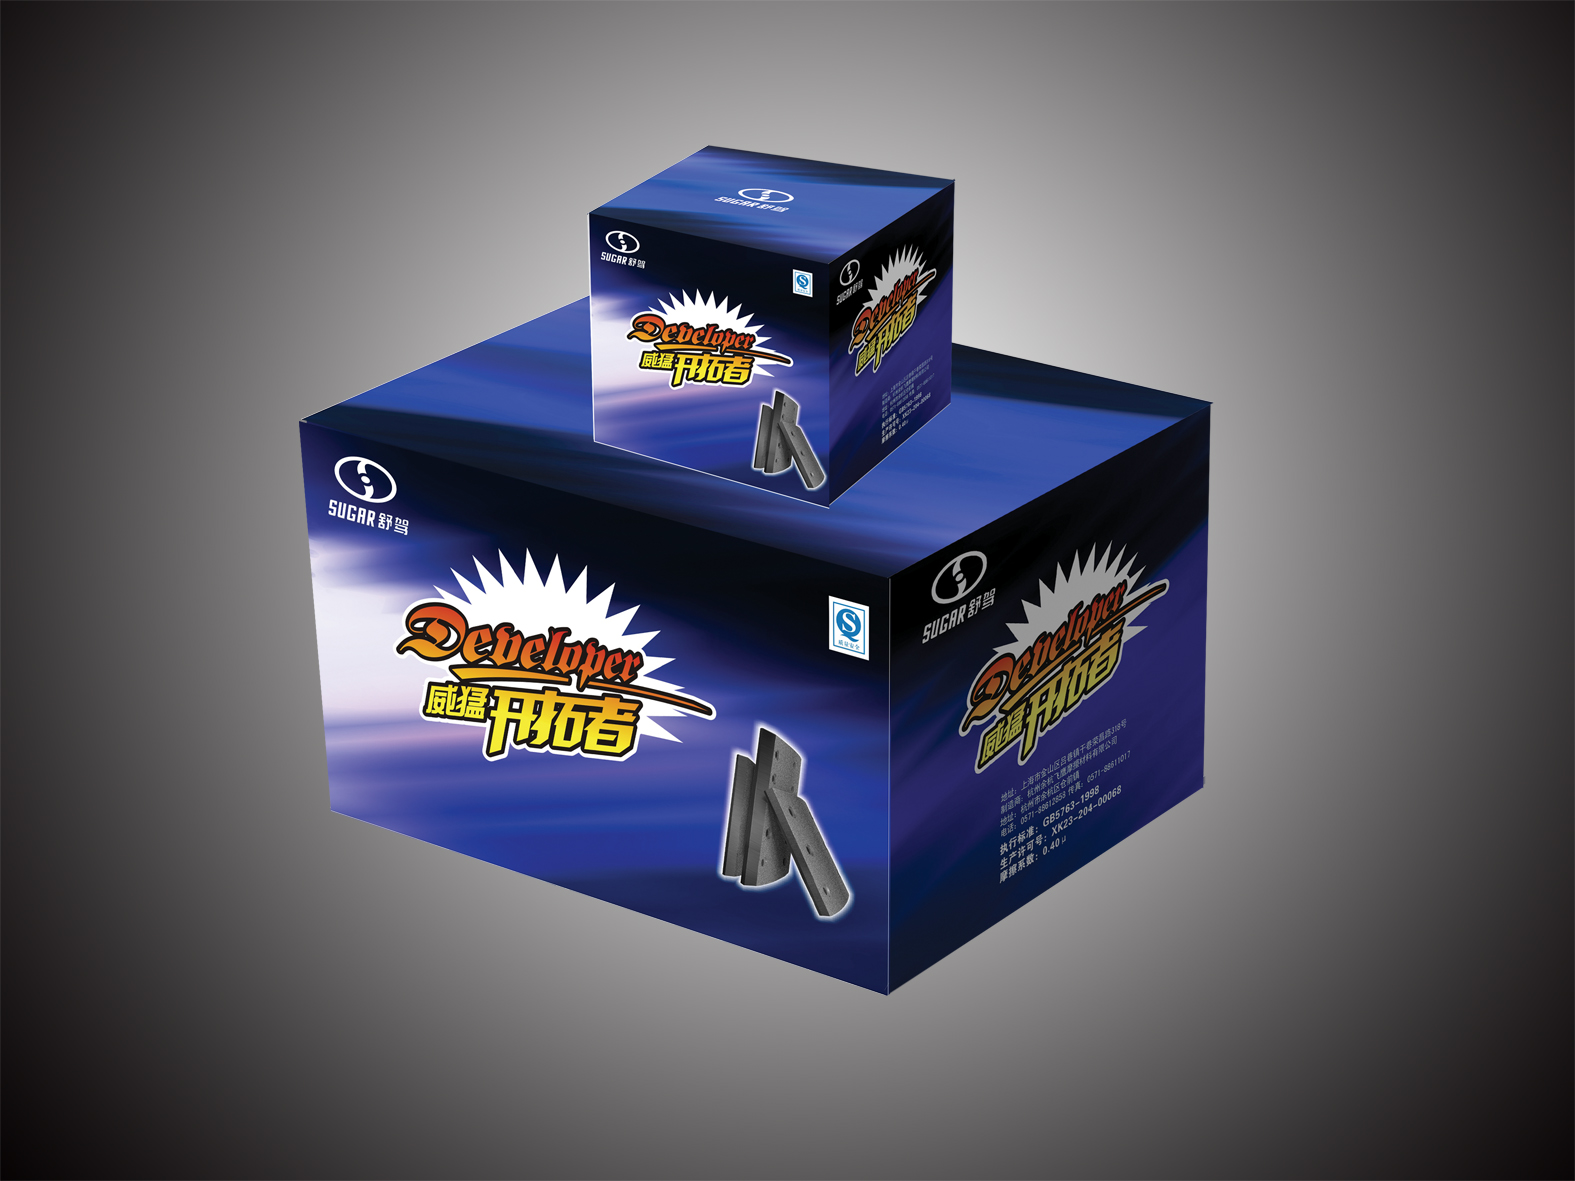 Shu driving brand packaging